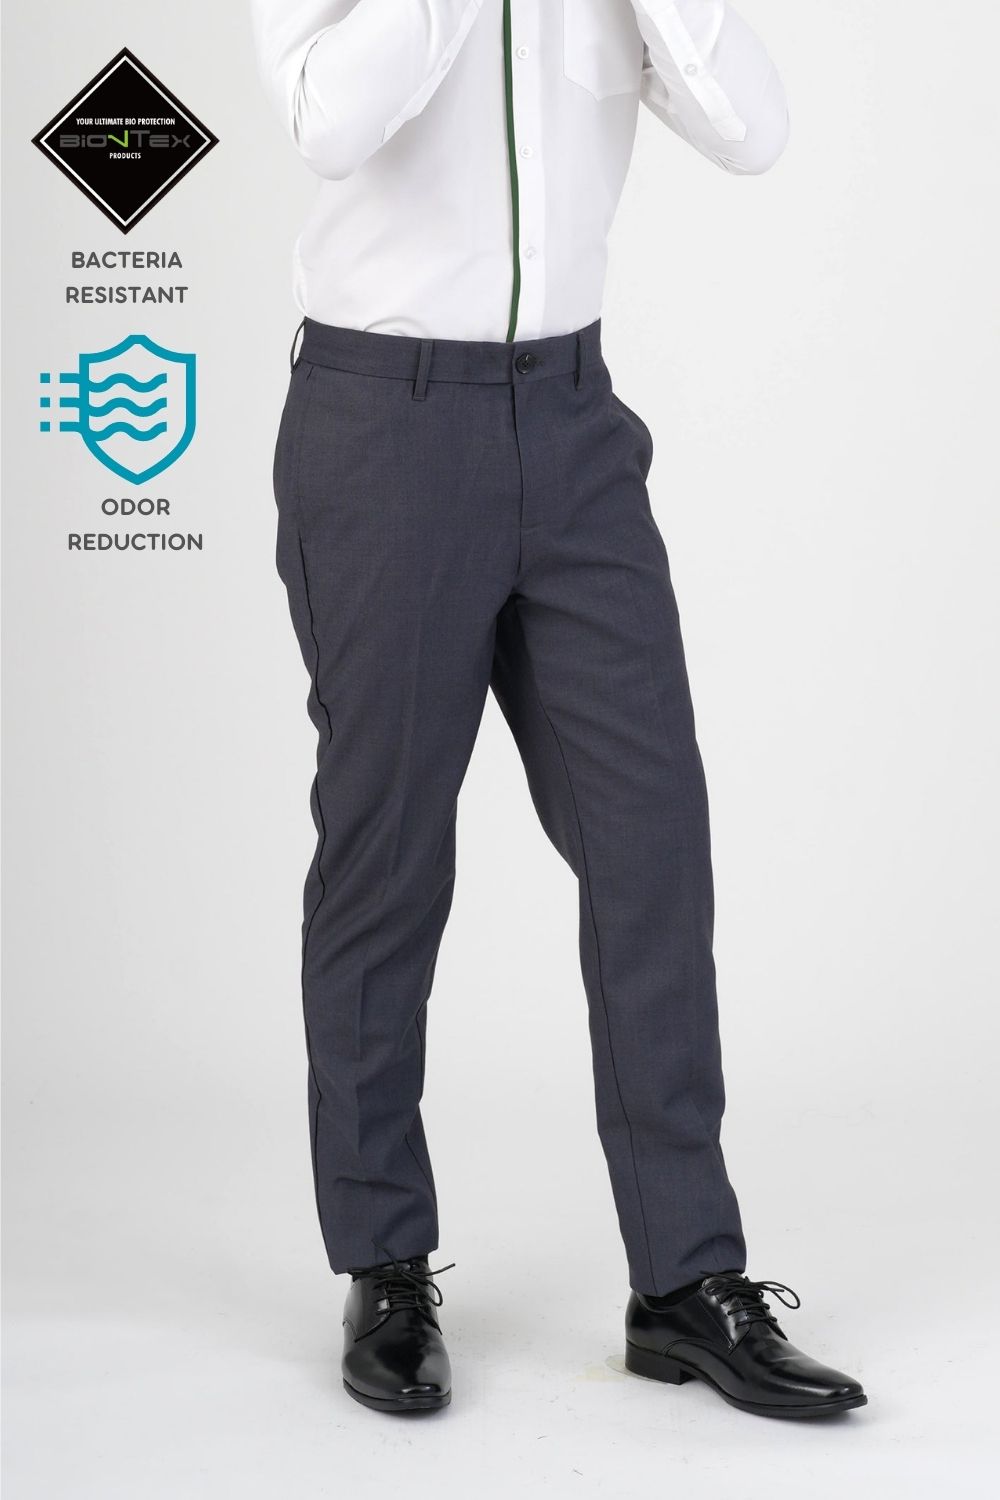 Men's BioNTex™ Flat Front Formal Pants